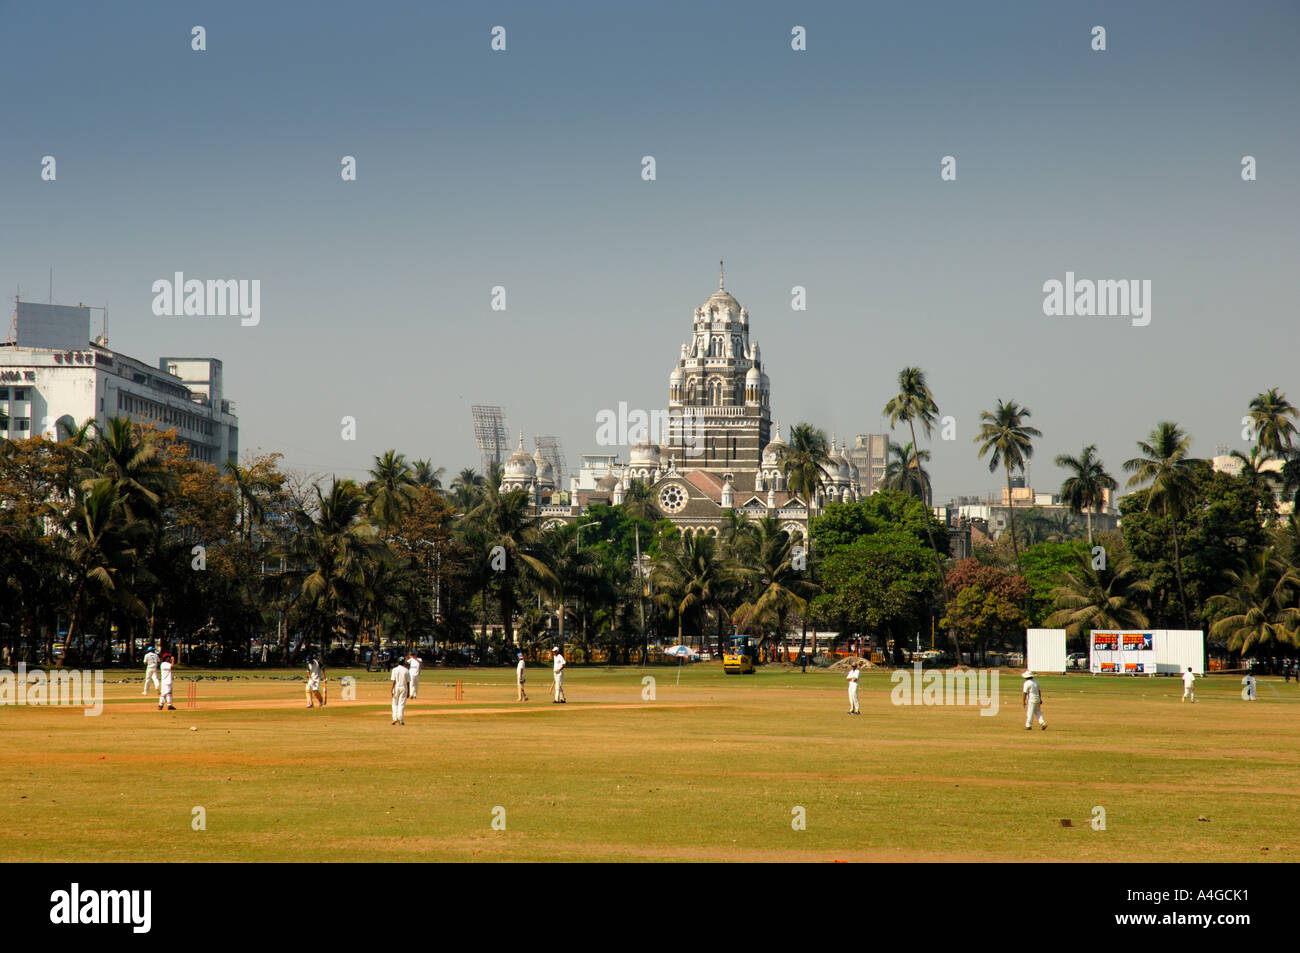 Cricket ground with backdrop of British colonial buildings Mumbai Maharashtra India Stock Photo